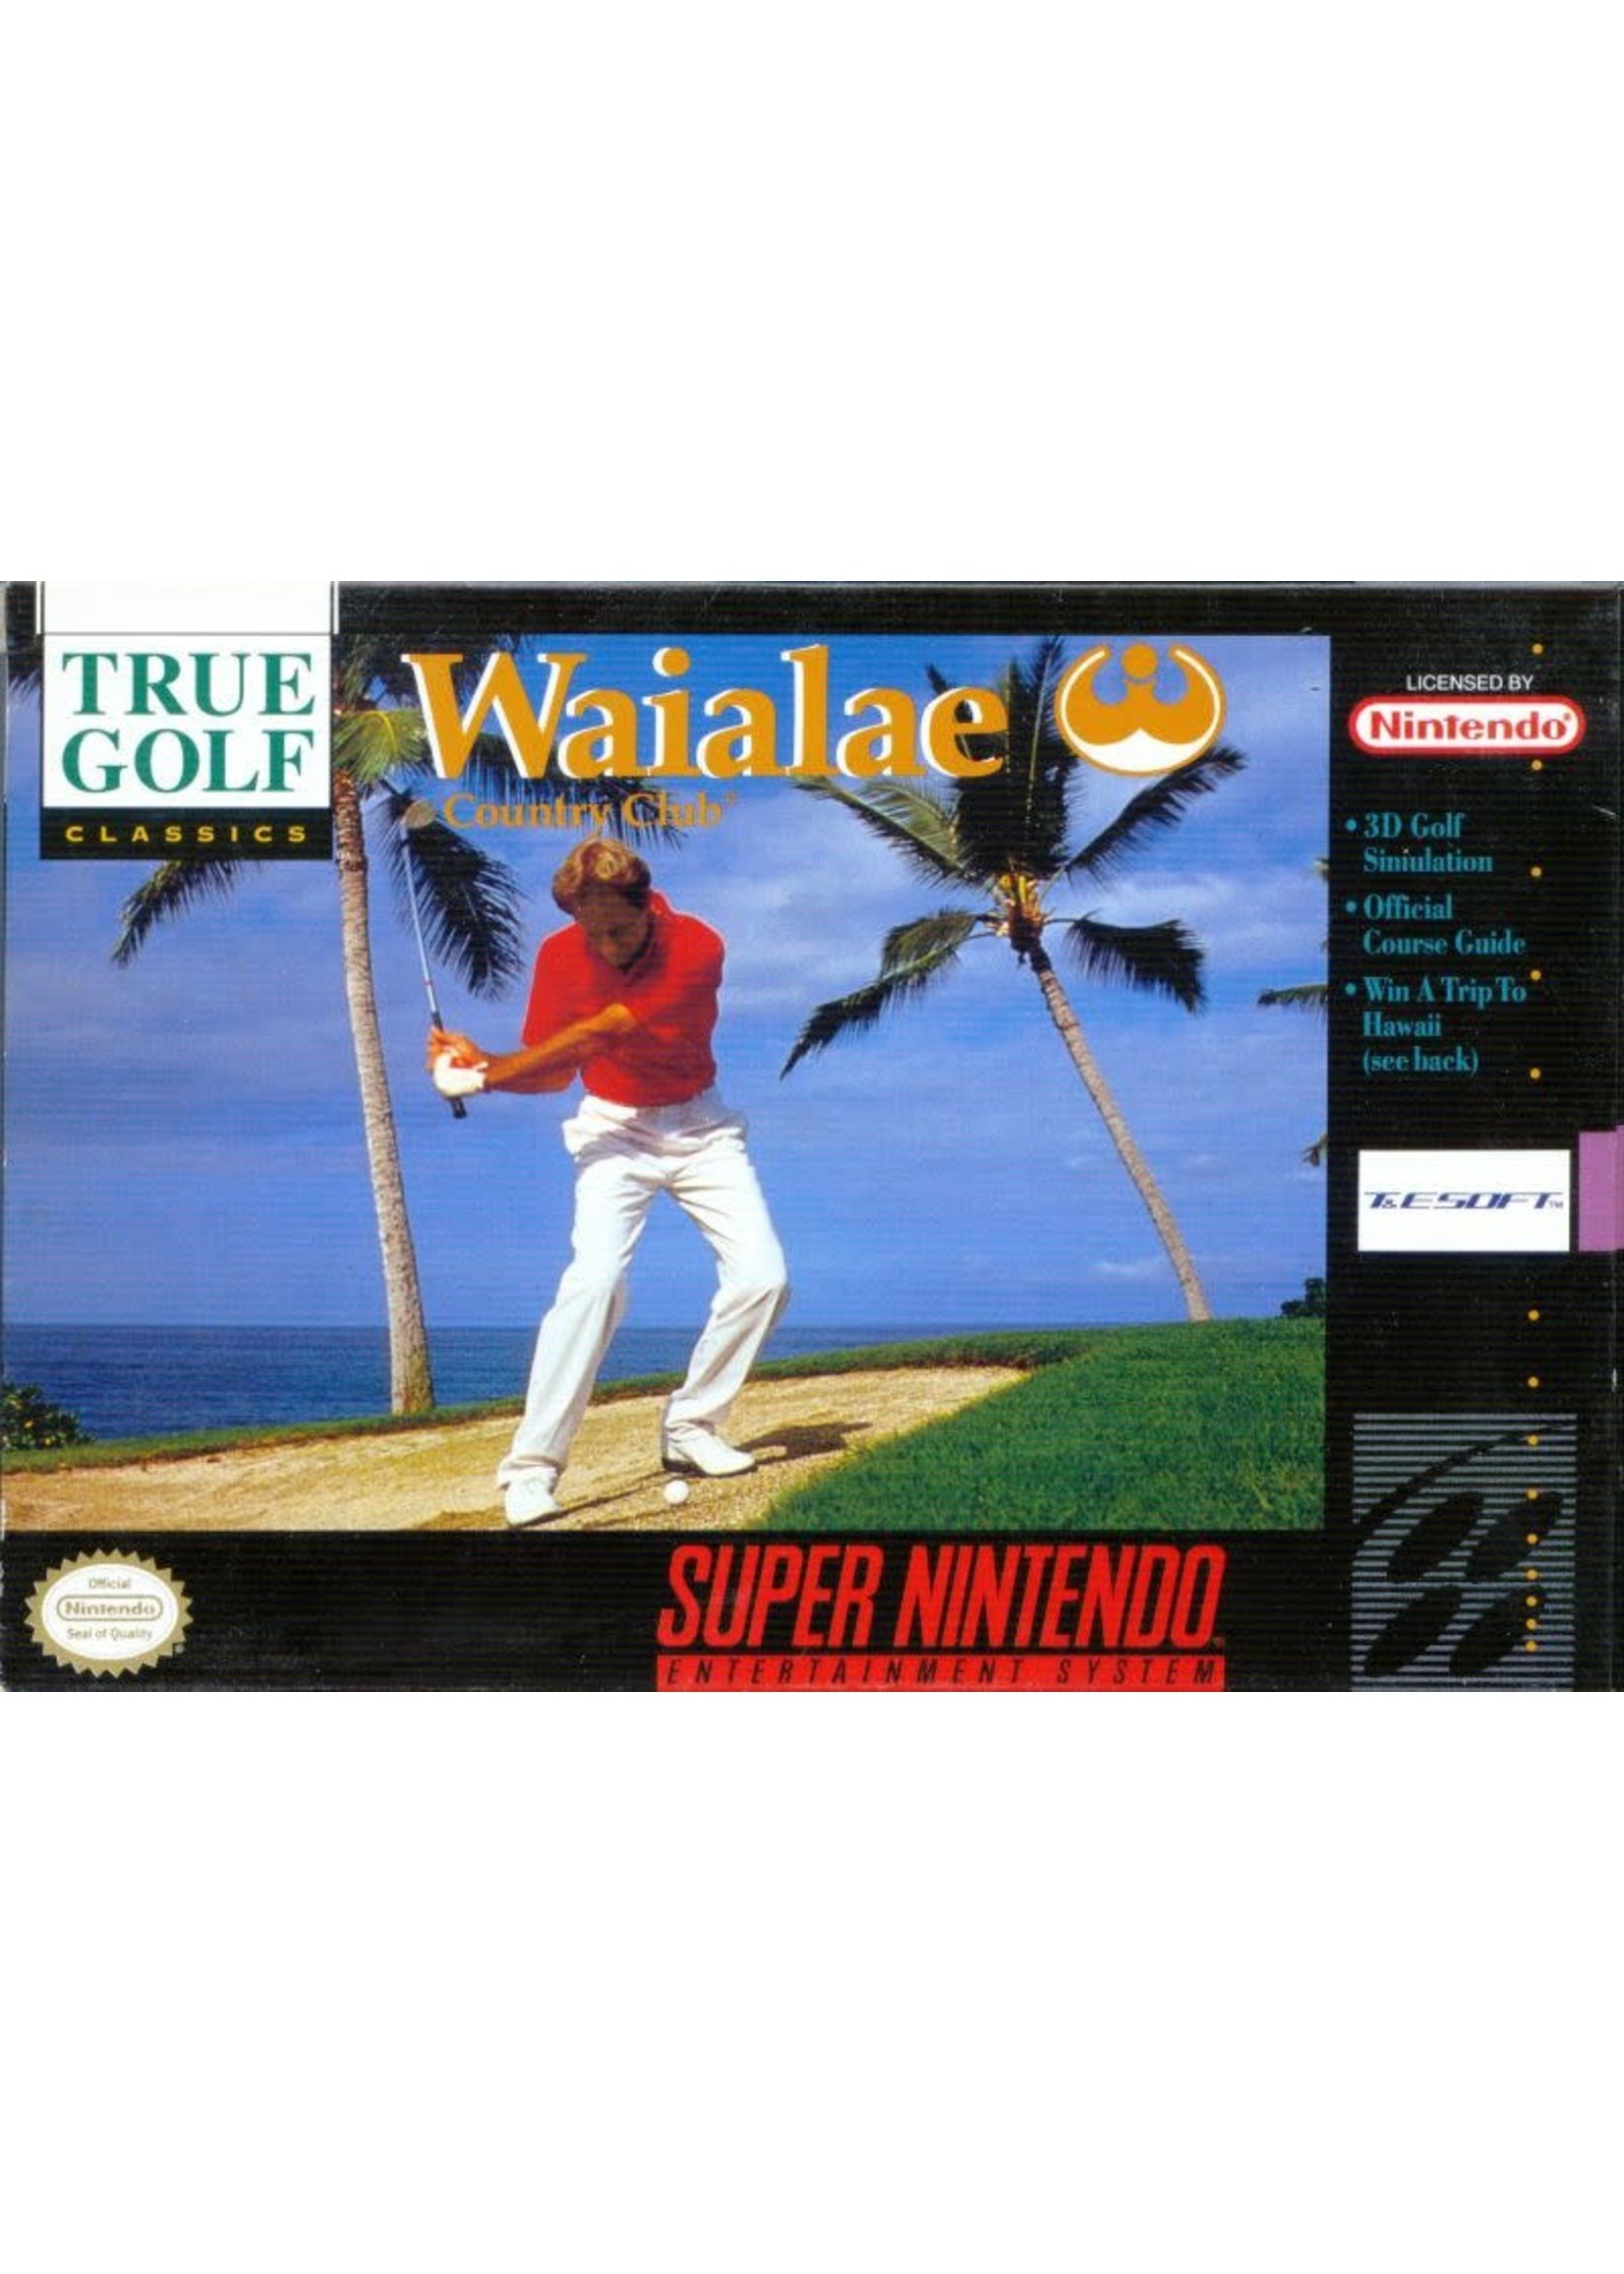 Nintendo Super Nintendo (SNES) Waialae Country Club